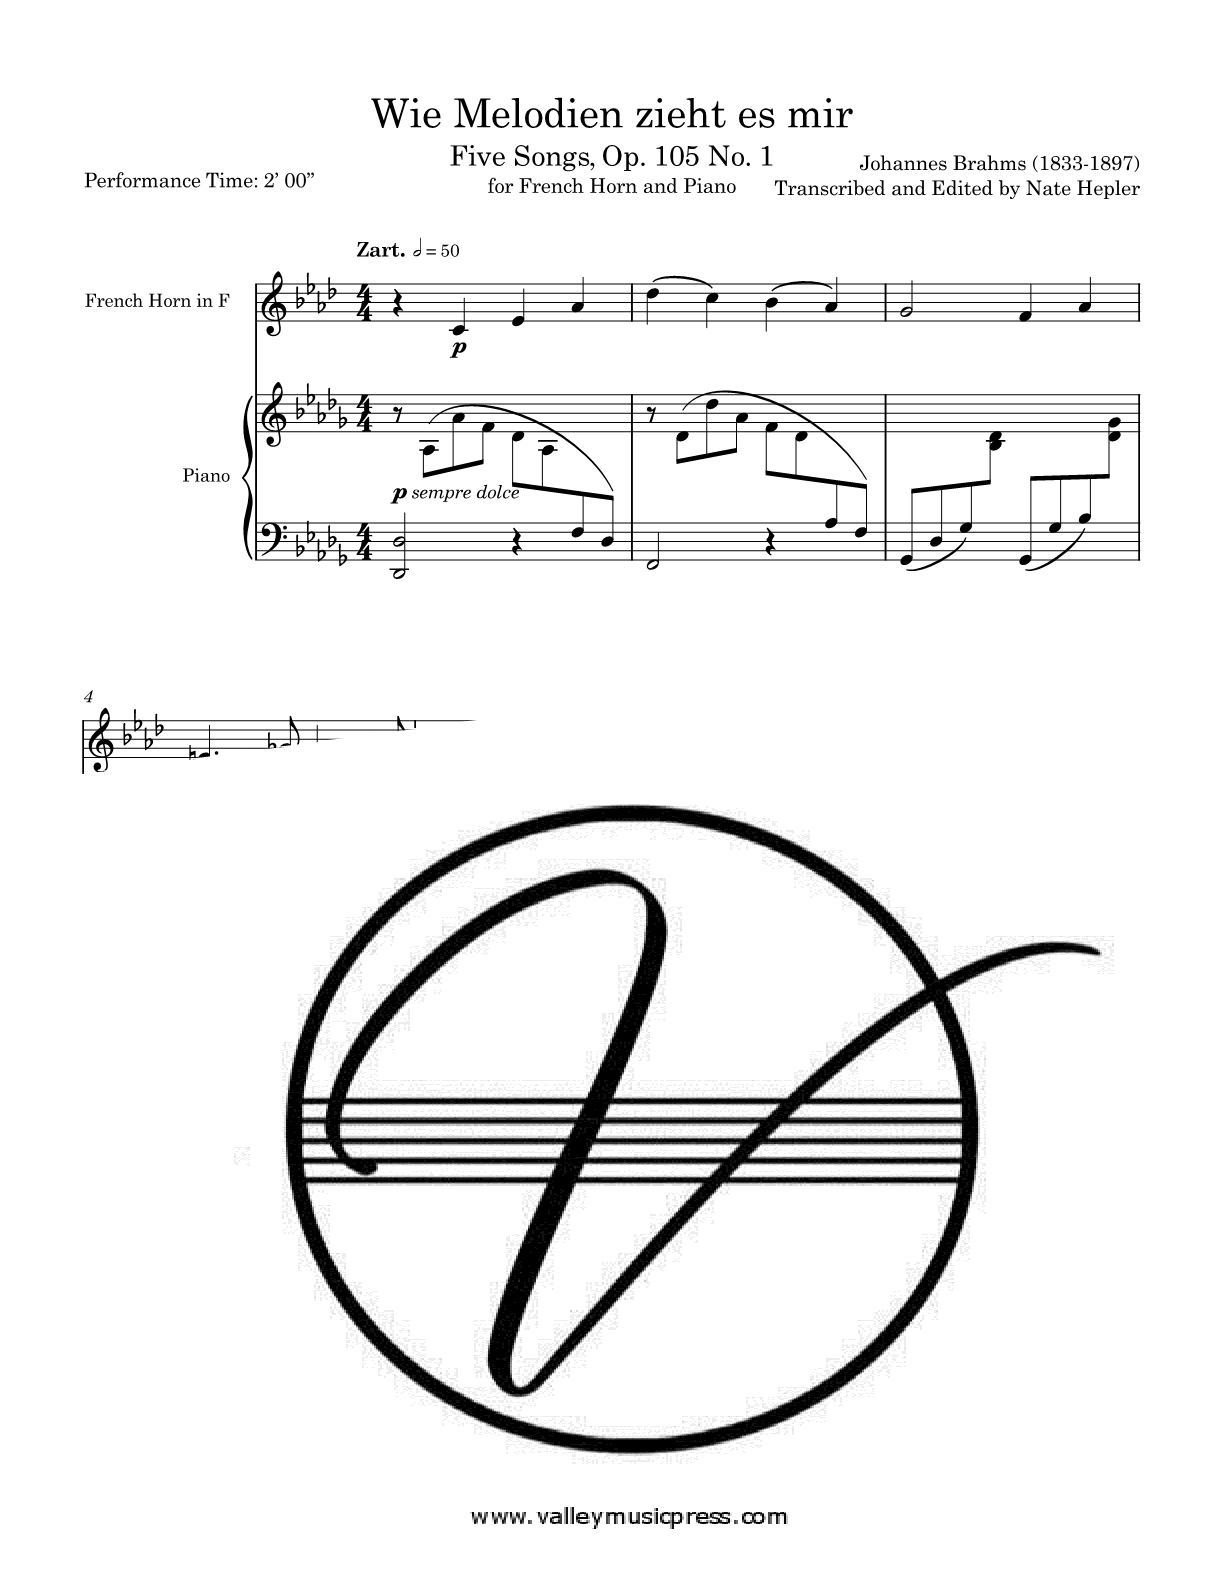 Brahms - Wie Melodien zieht es mir Five Songs Op. 105(Trp & Pno) - Click Image to Close